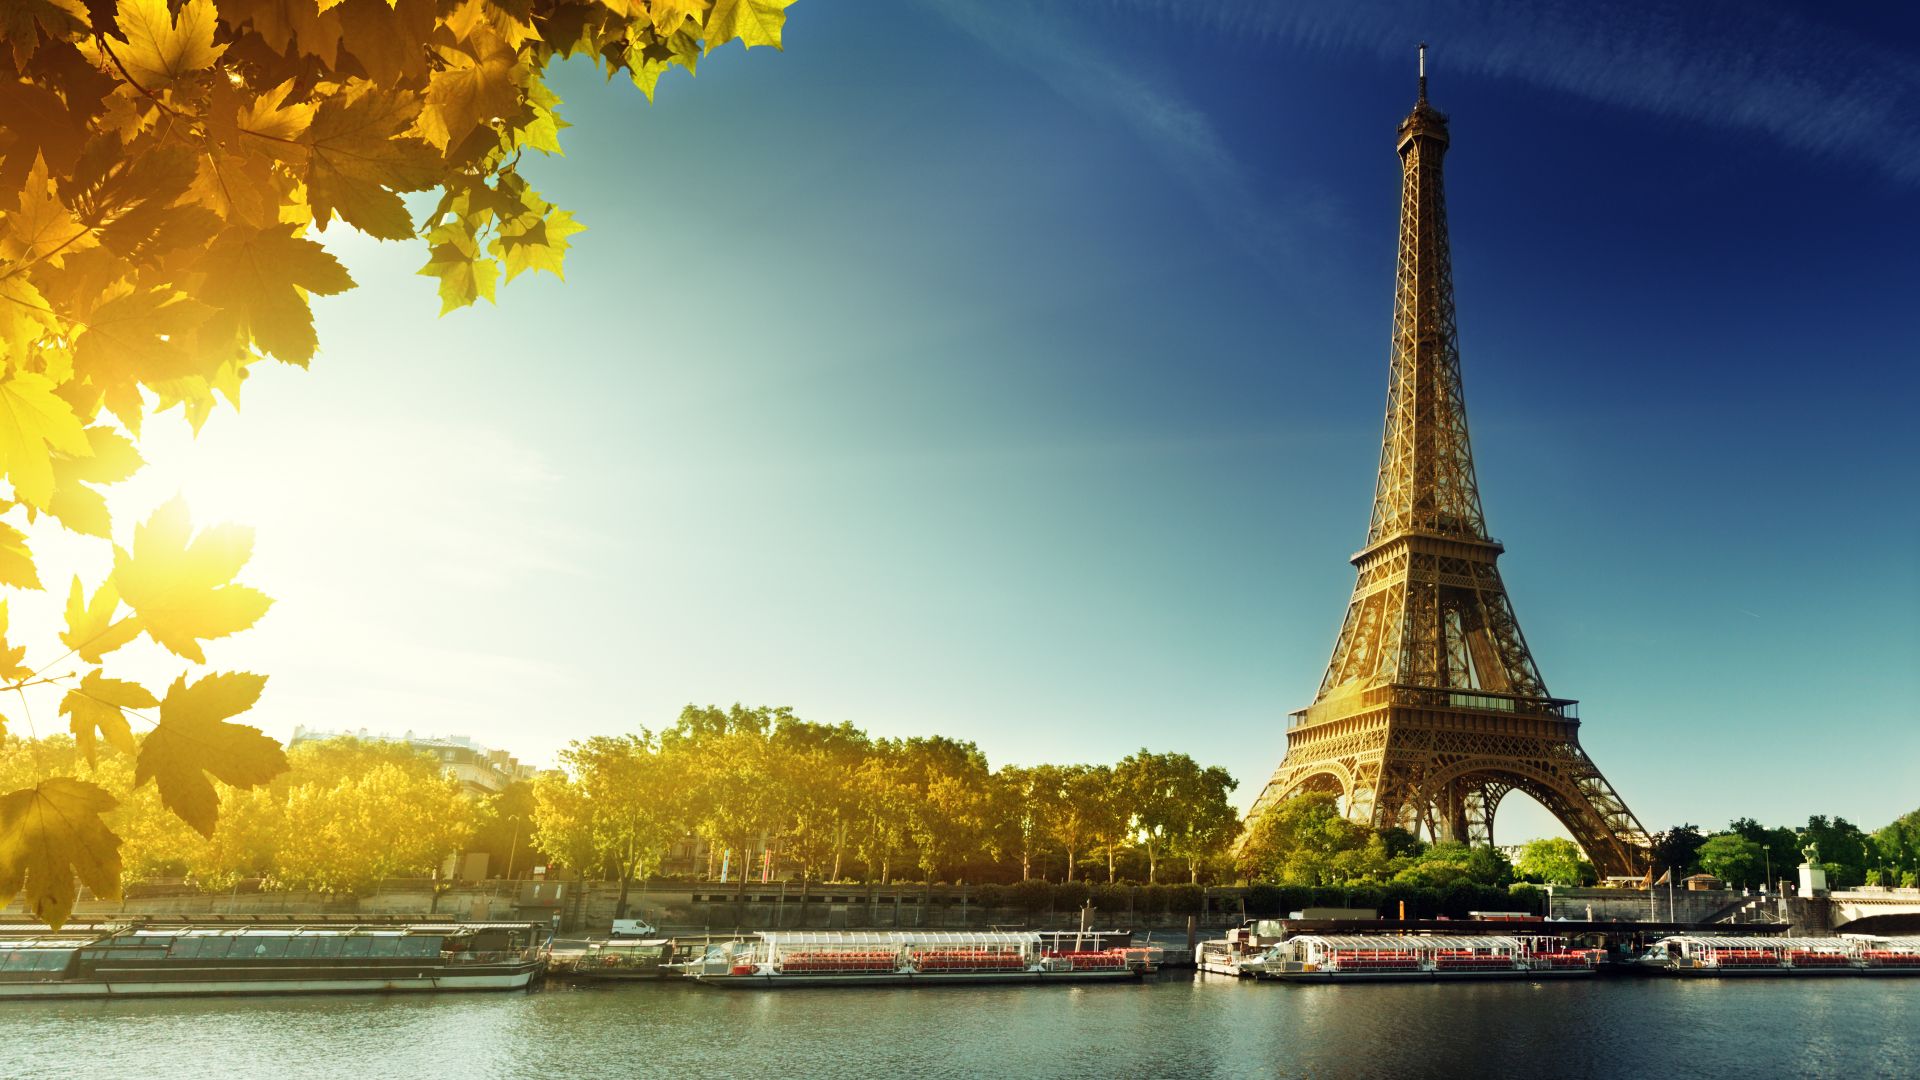 Paris, Eiffel Tower, France, autumn, travel, tourism (horizontal)